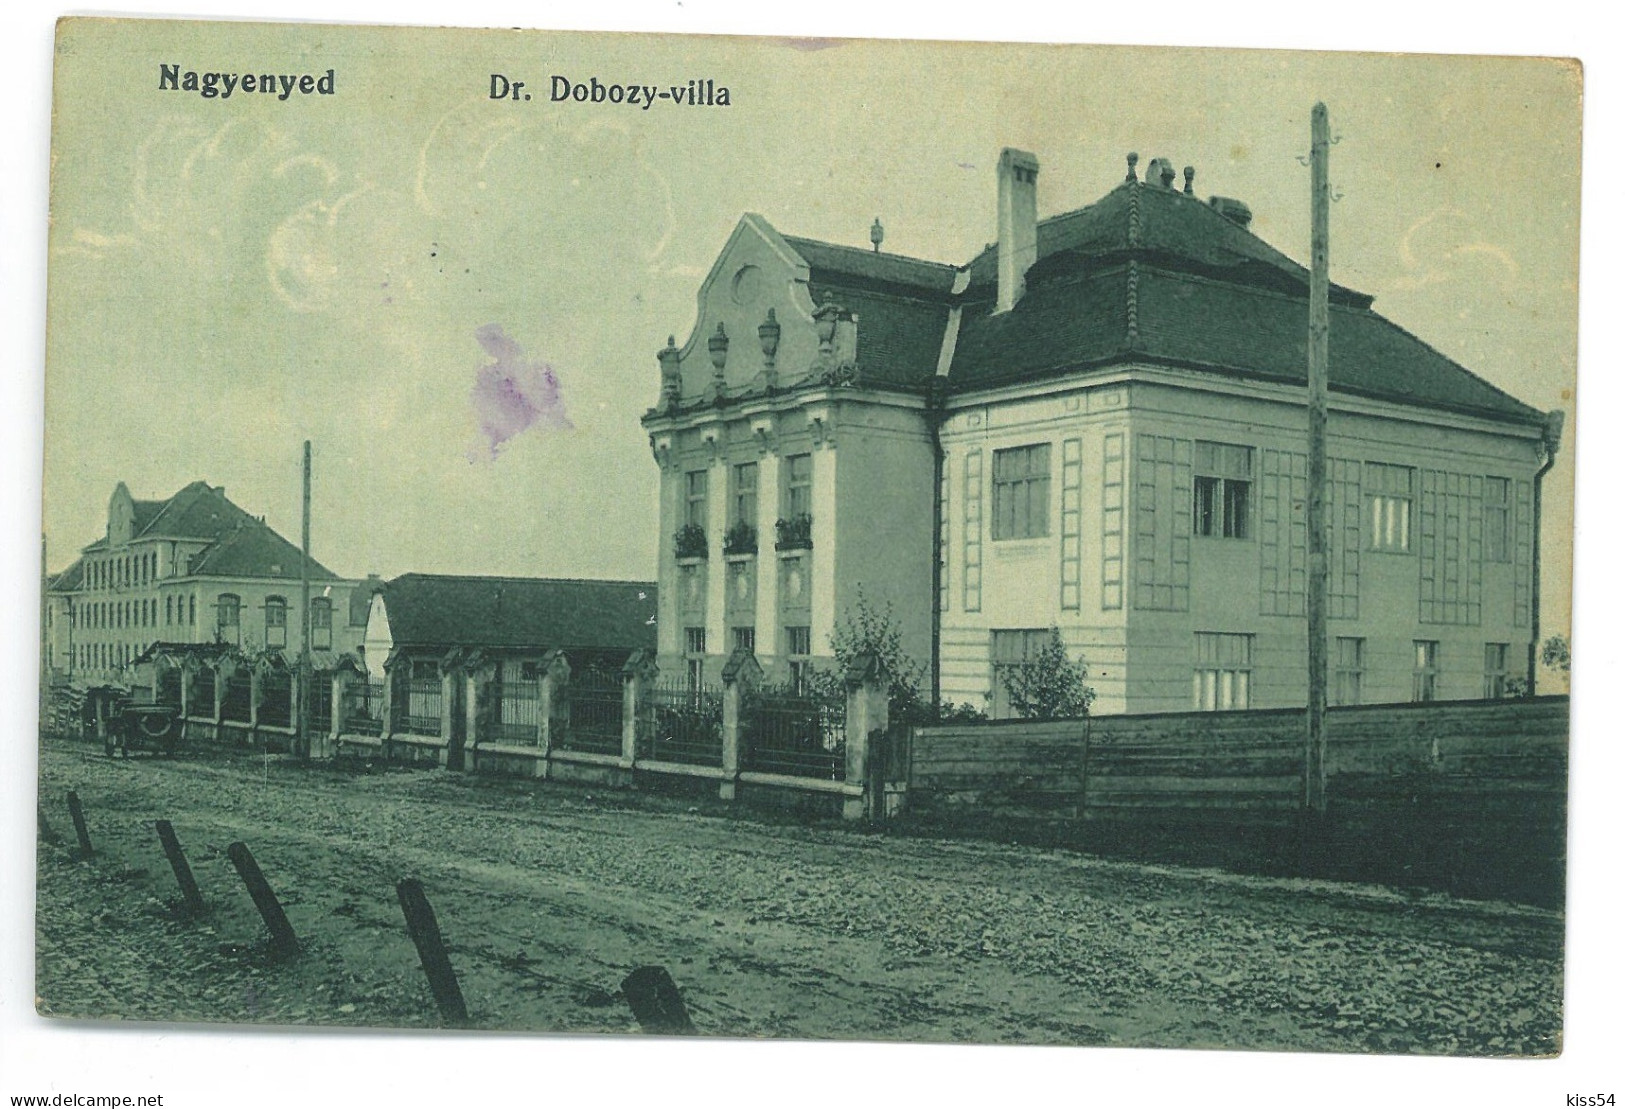 RO 89 - 20792 AIUD, Alba, Romania - Old Postcard, CENSOR - Used - 1916 - Roumanie